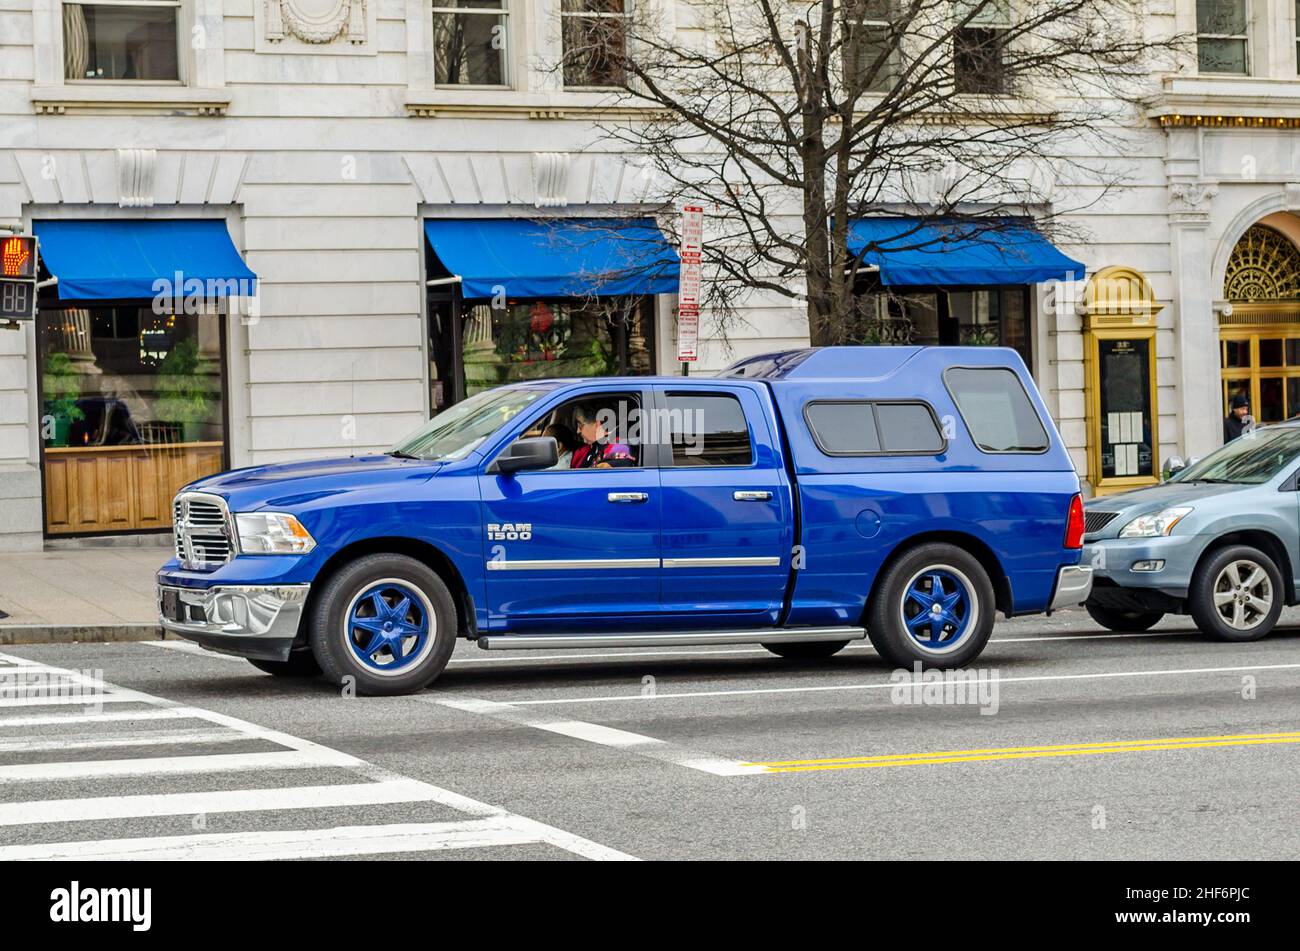 Blue Dodge RAM 1500 Truck on the Road a Washington DC, VA, USA. Fotografia di strada urbana. Automobili americane Foto Stock